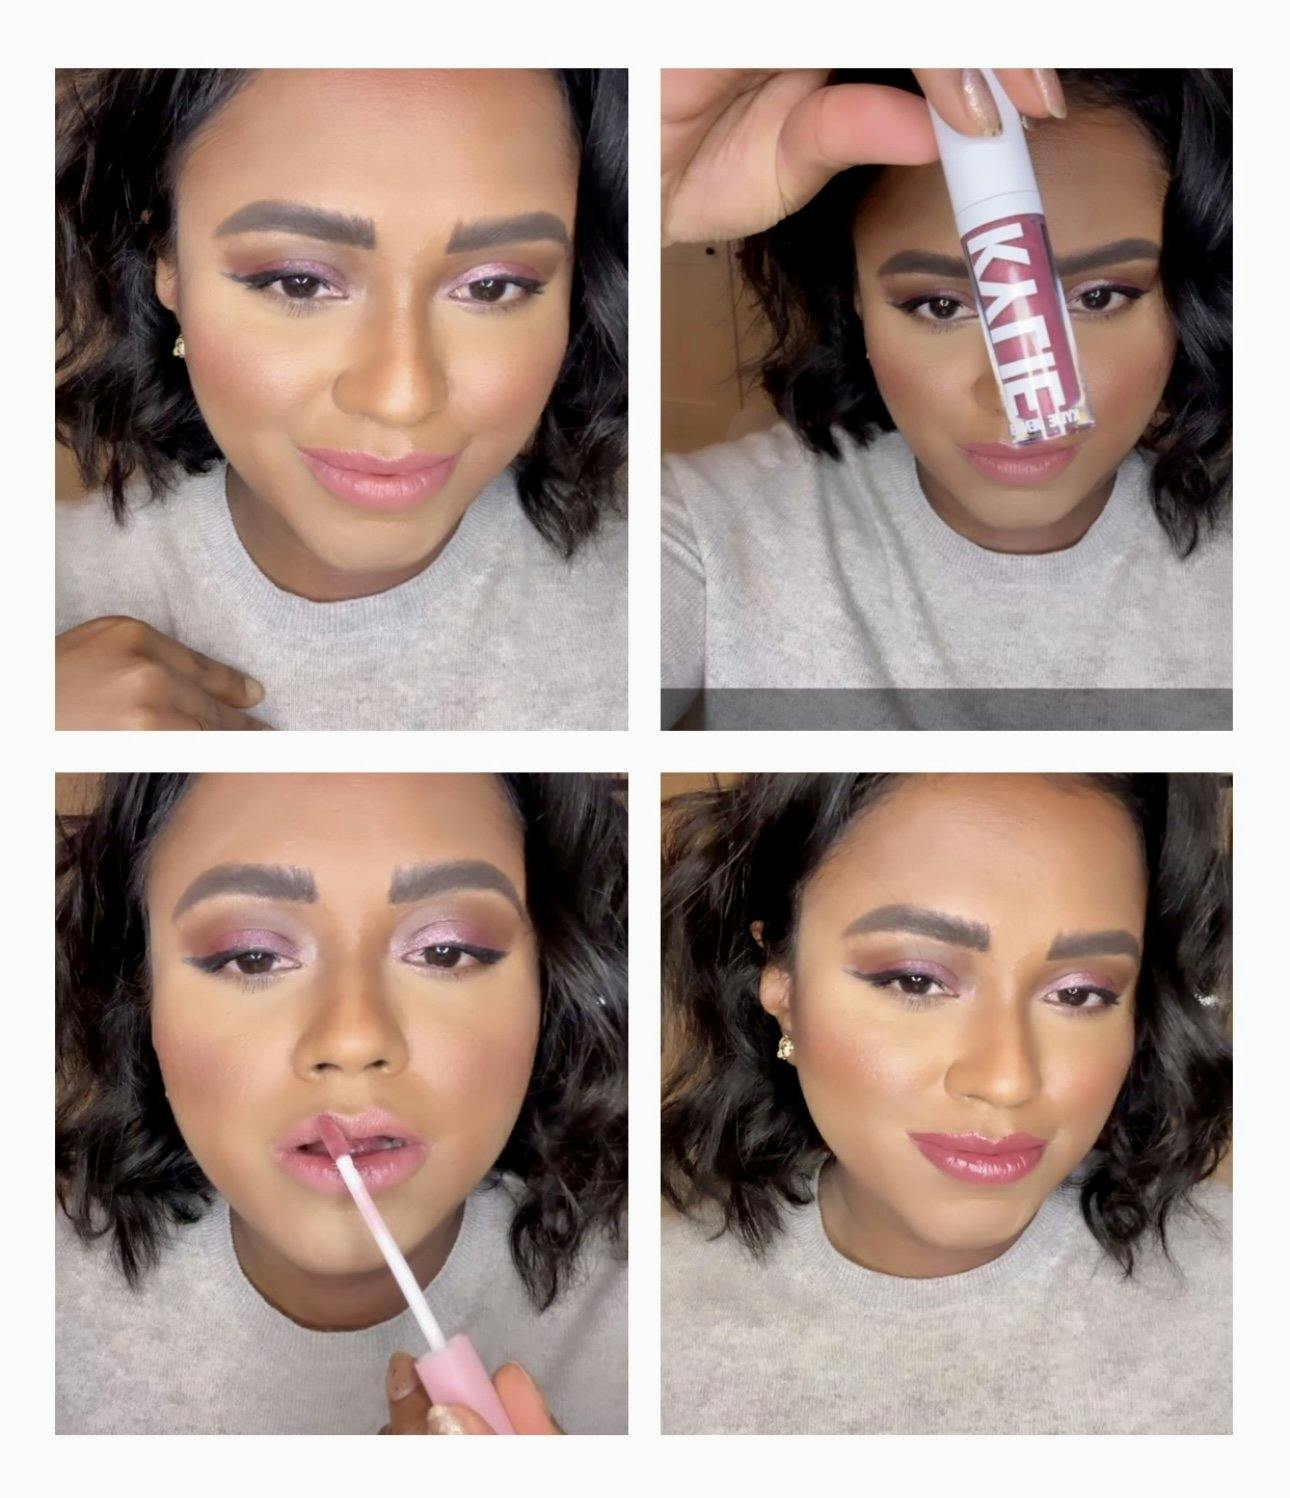 Sachini testing Kylie Cosmetics lip products